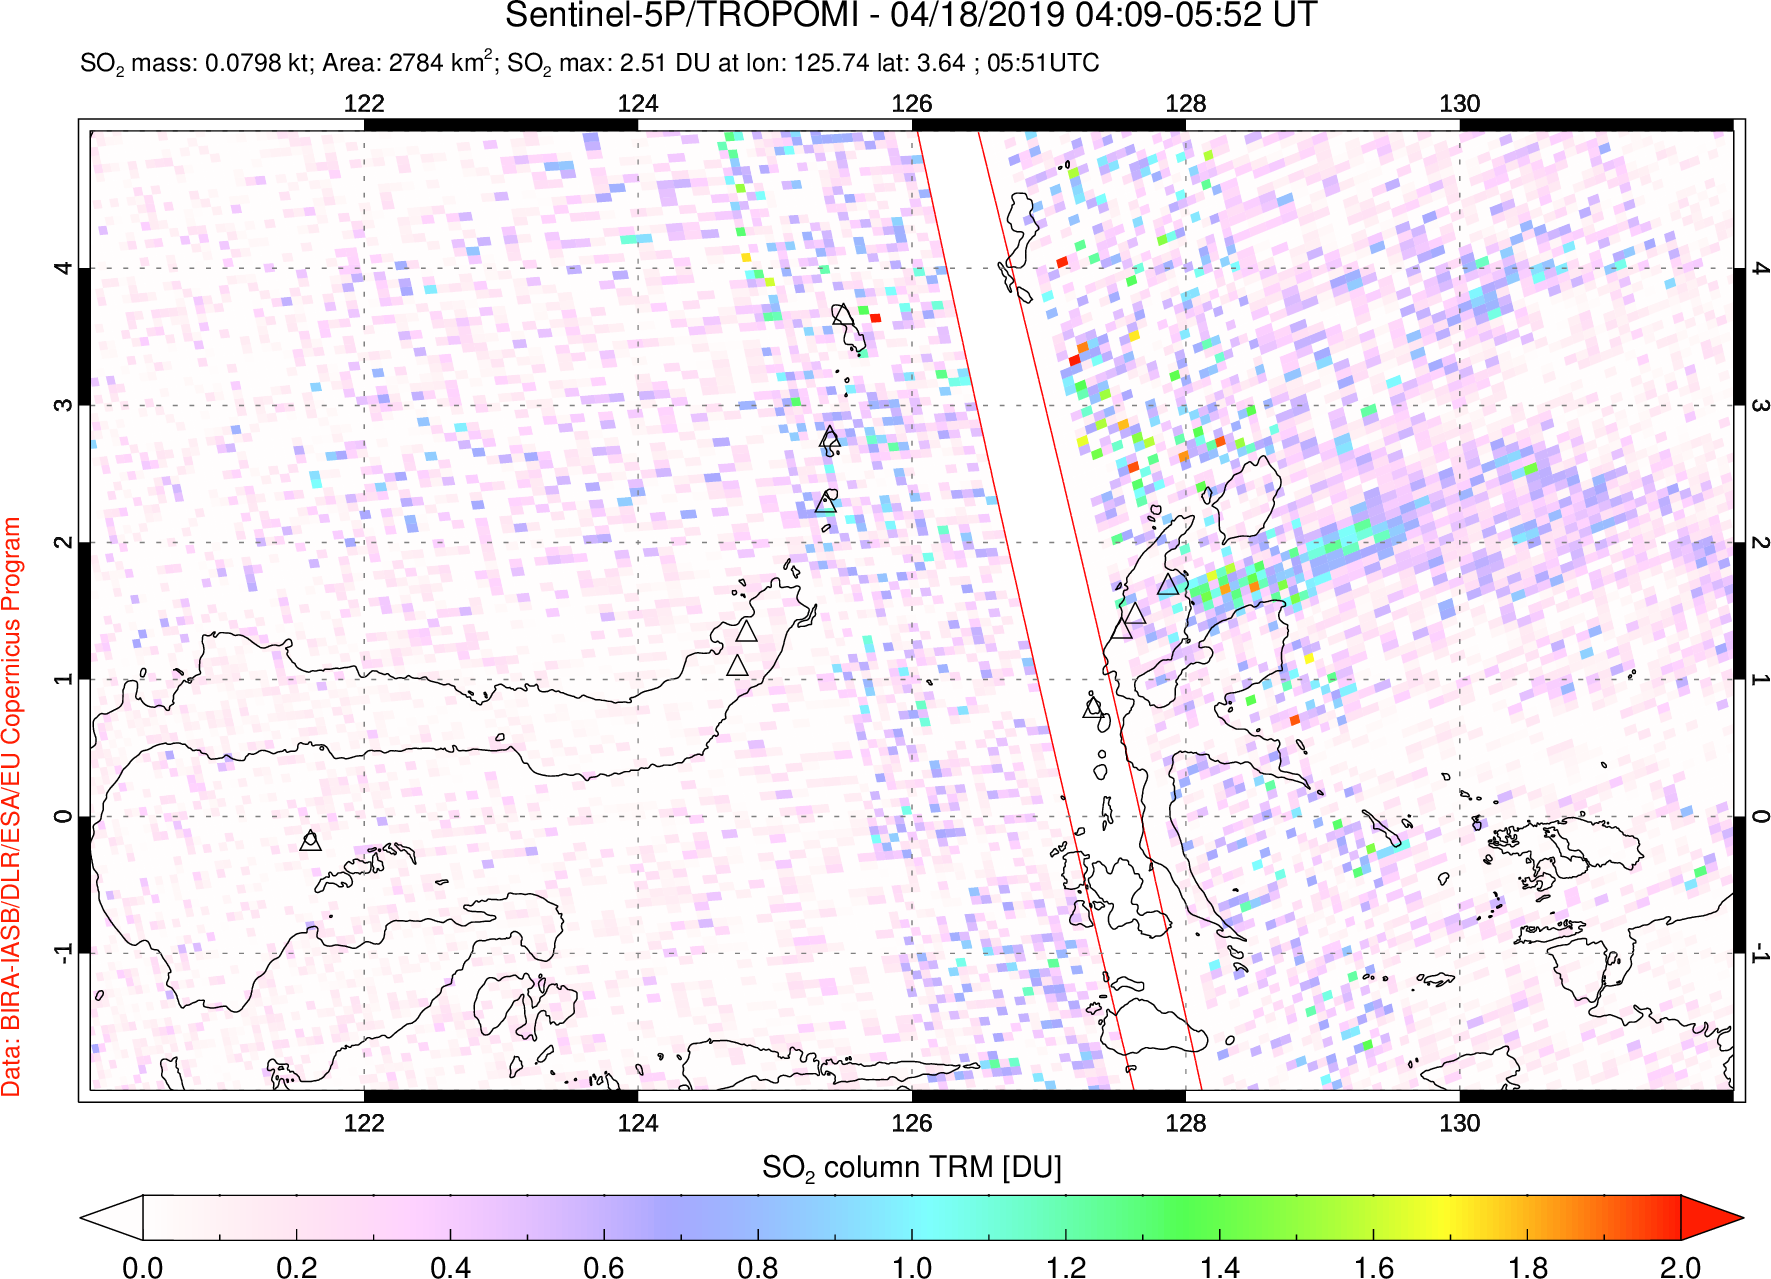 A sulfur dioxide image over Northern Sulawesi & Halmahera, Indonesia on Apr 18, 2019.